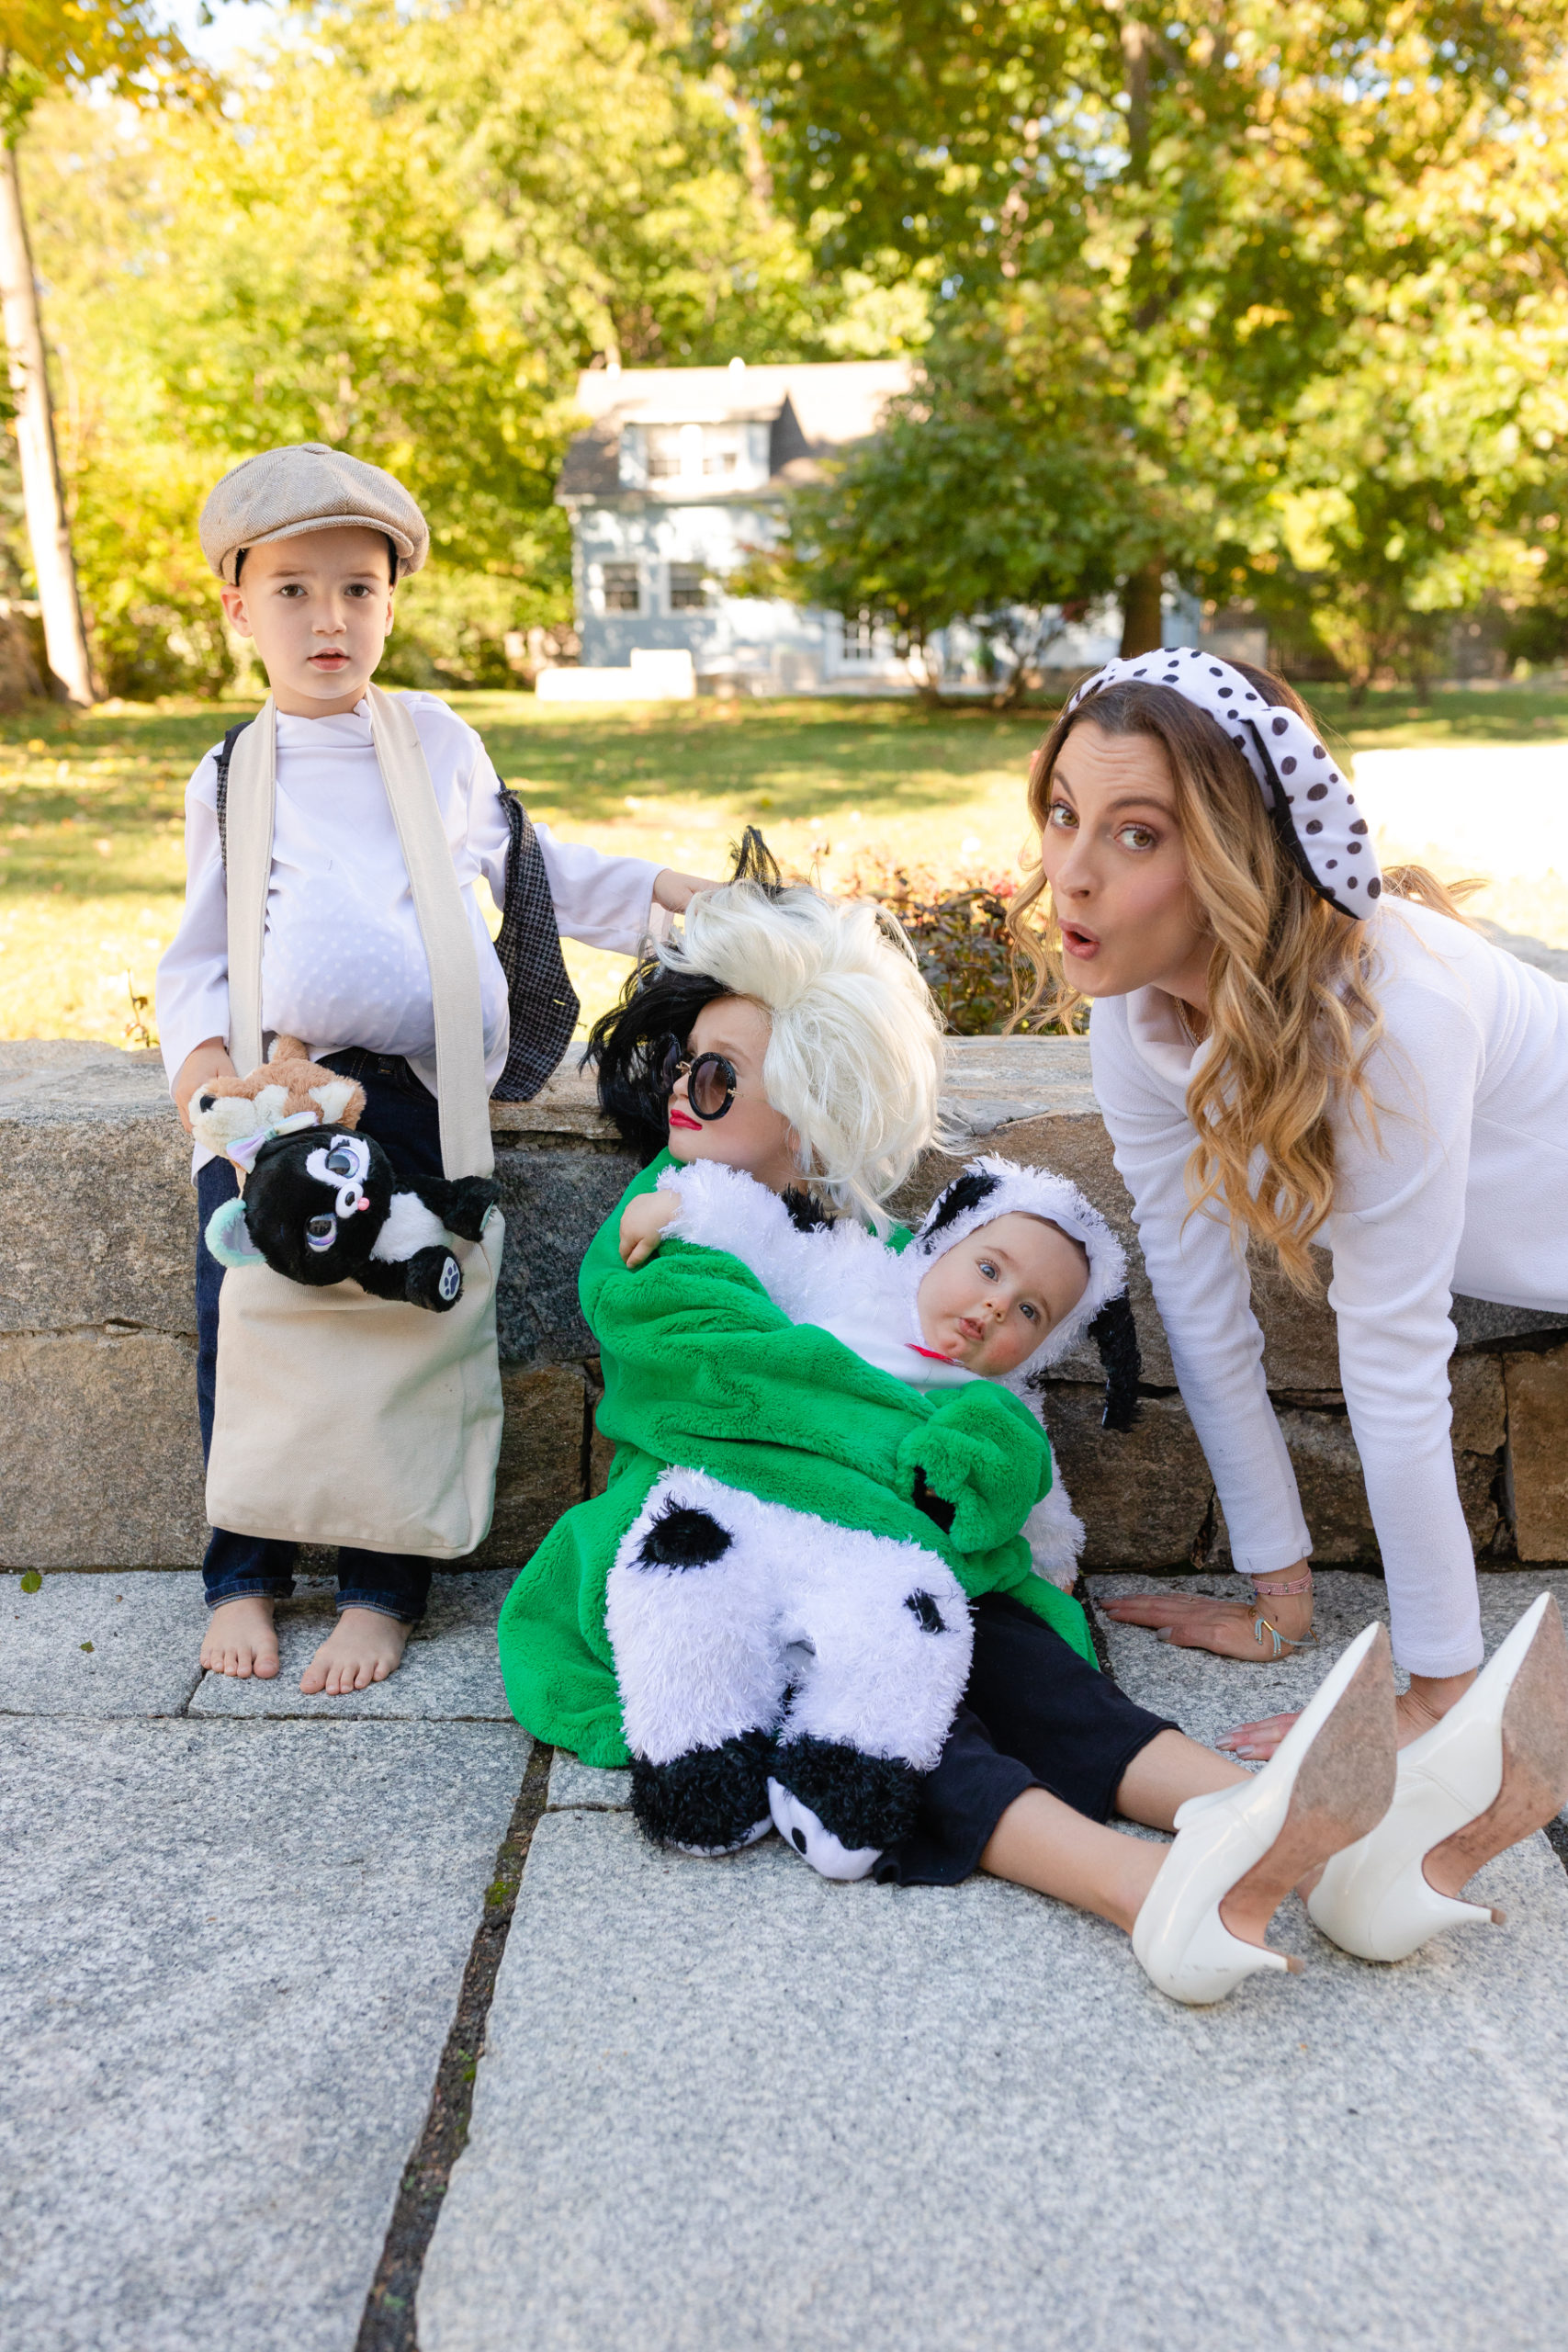 Eva Amurri shares another Family Halloween Costume idea: 101 Dalmations